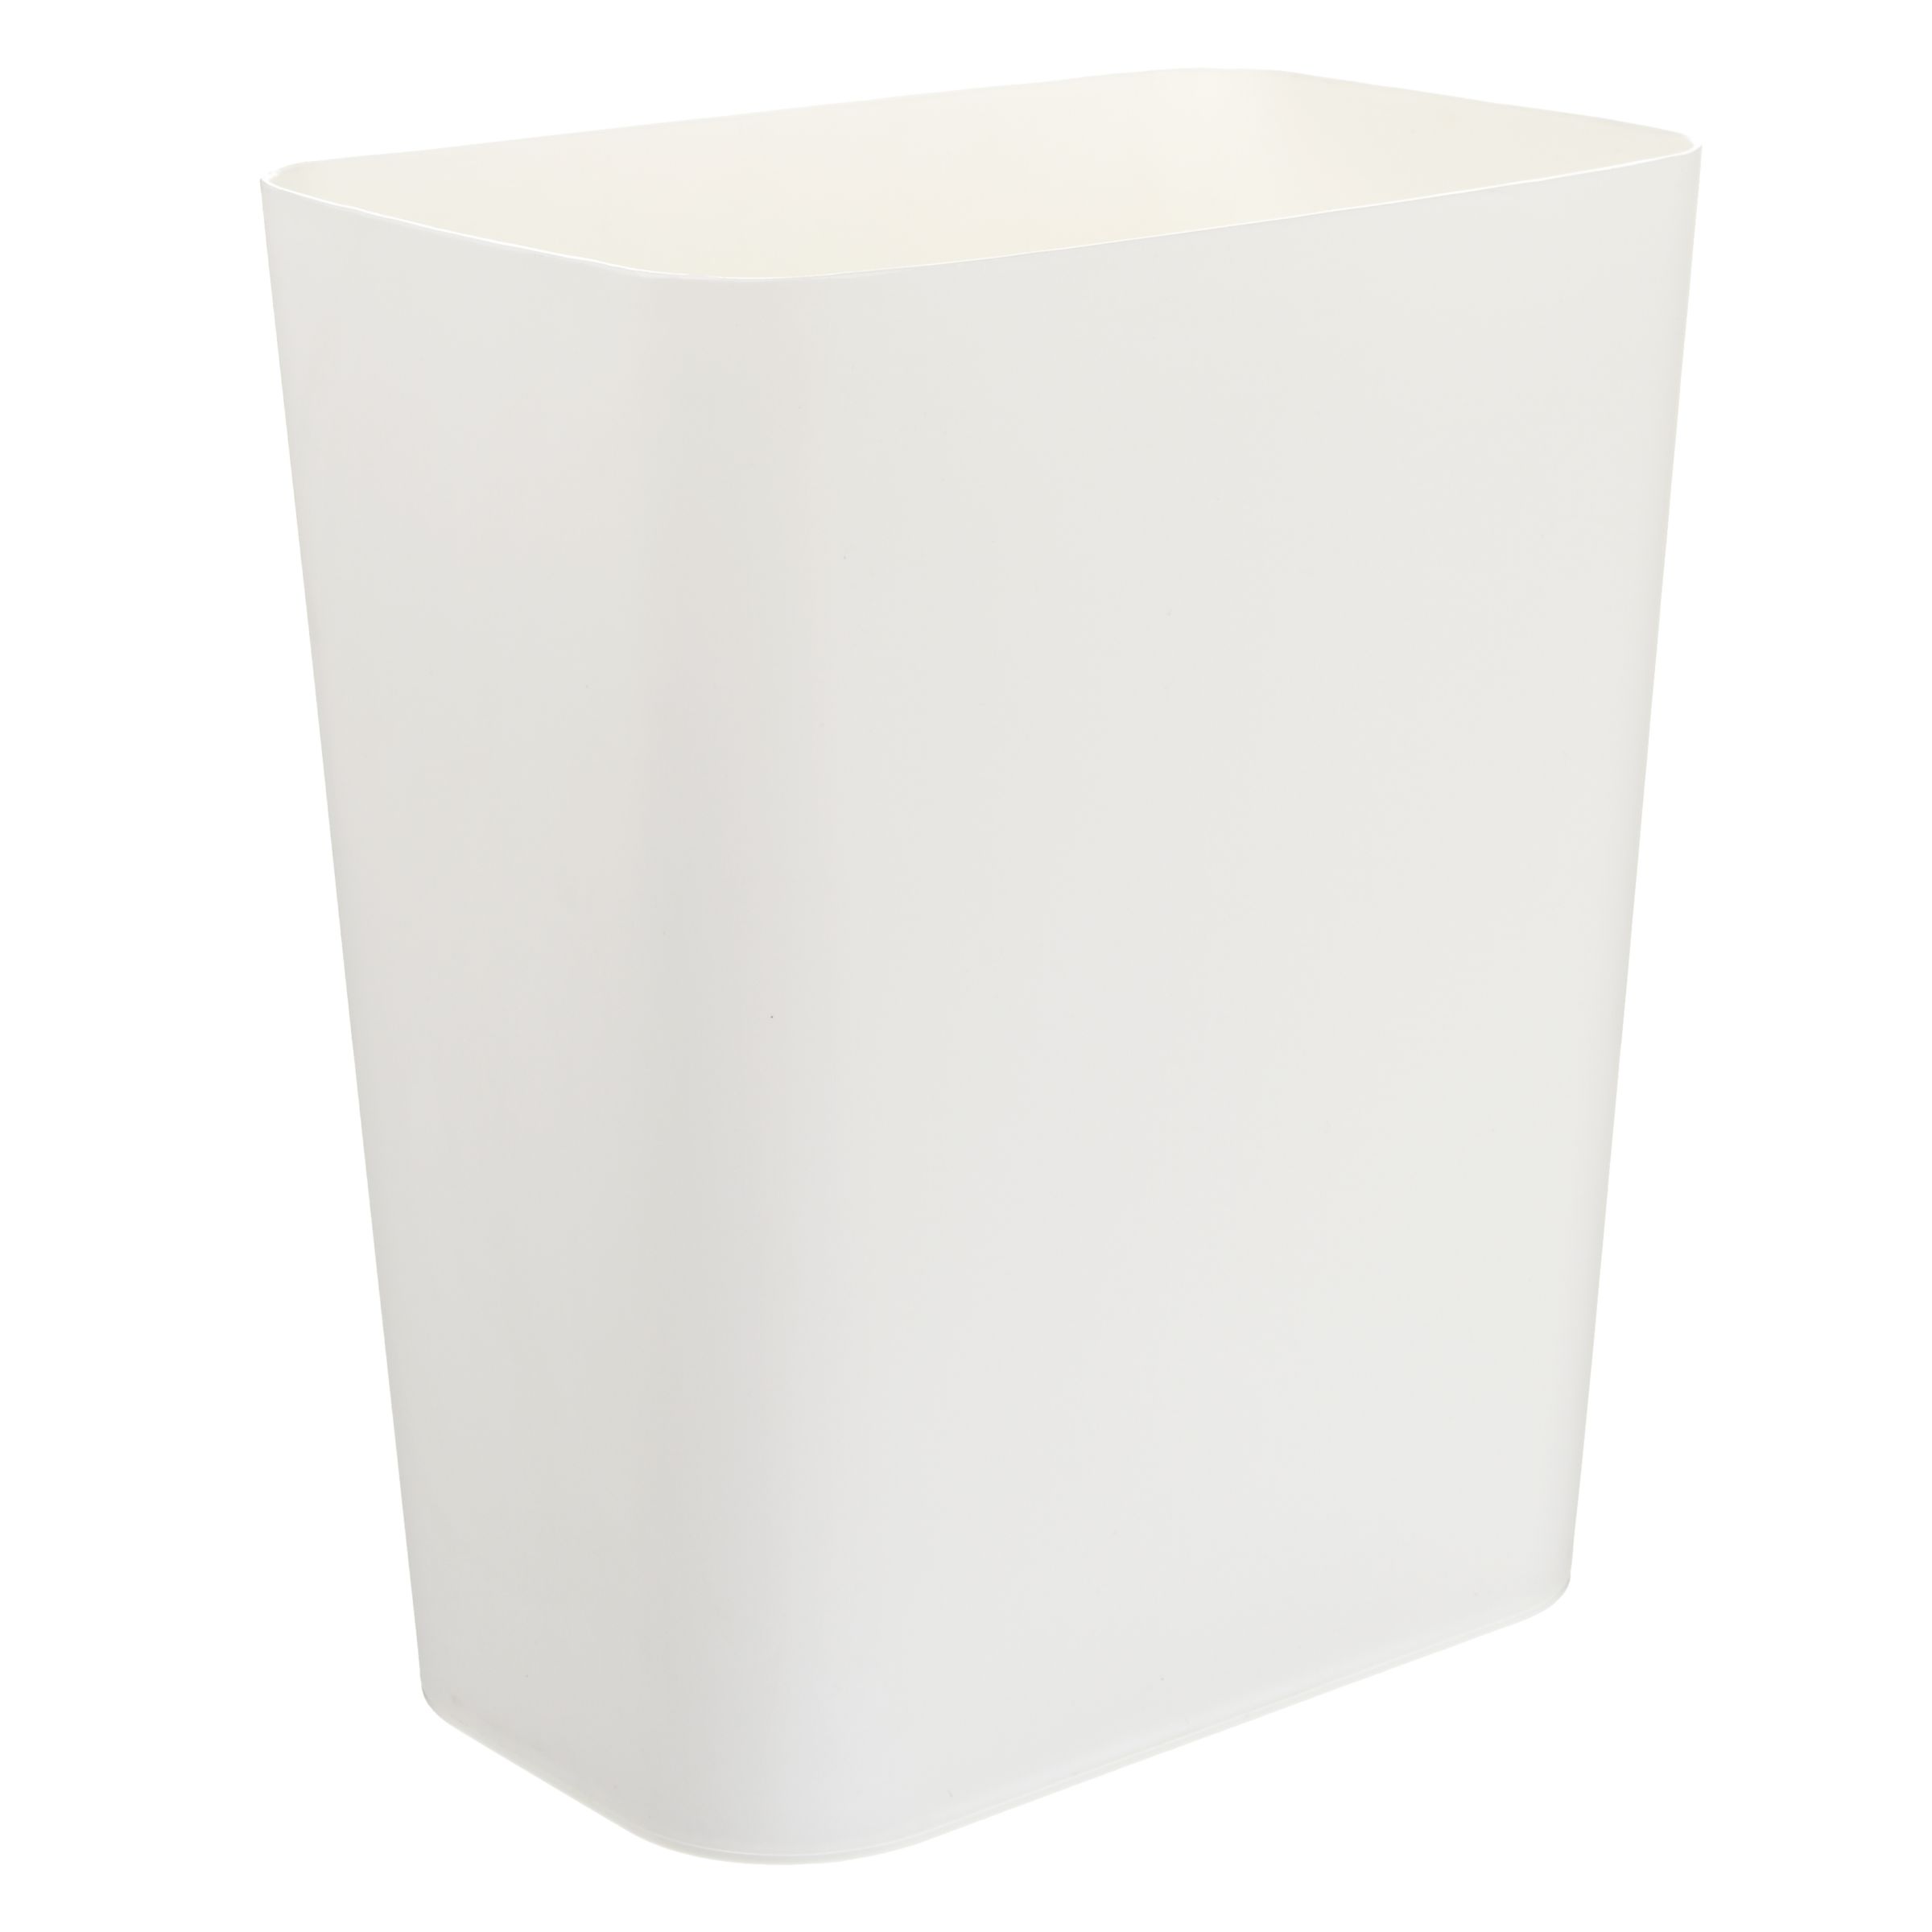 John Lewis Plastic Wastepaper Bin, White, 9L